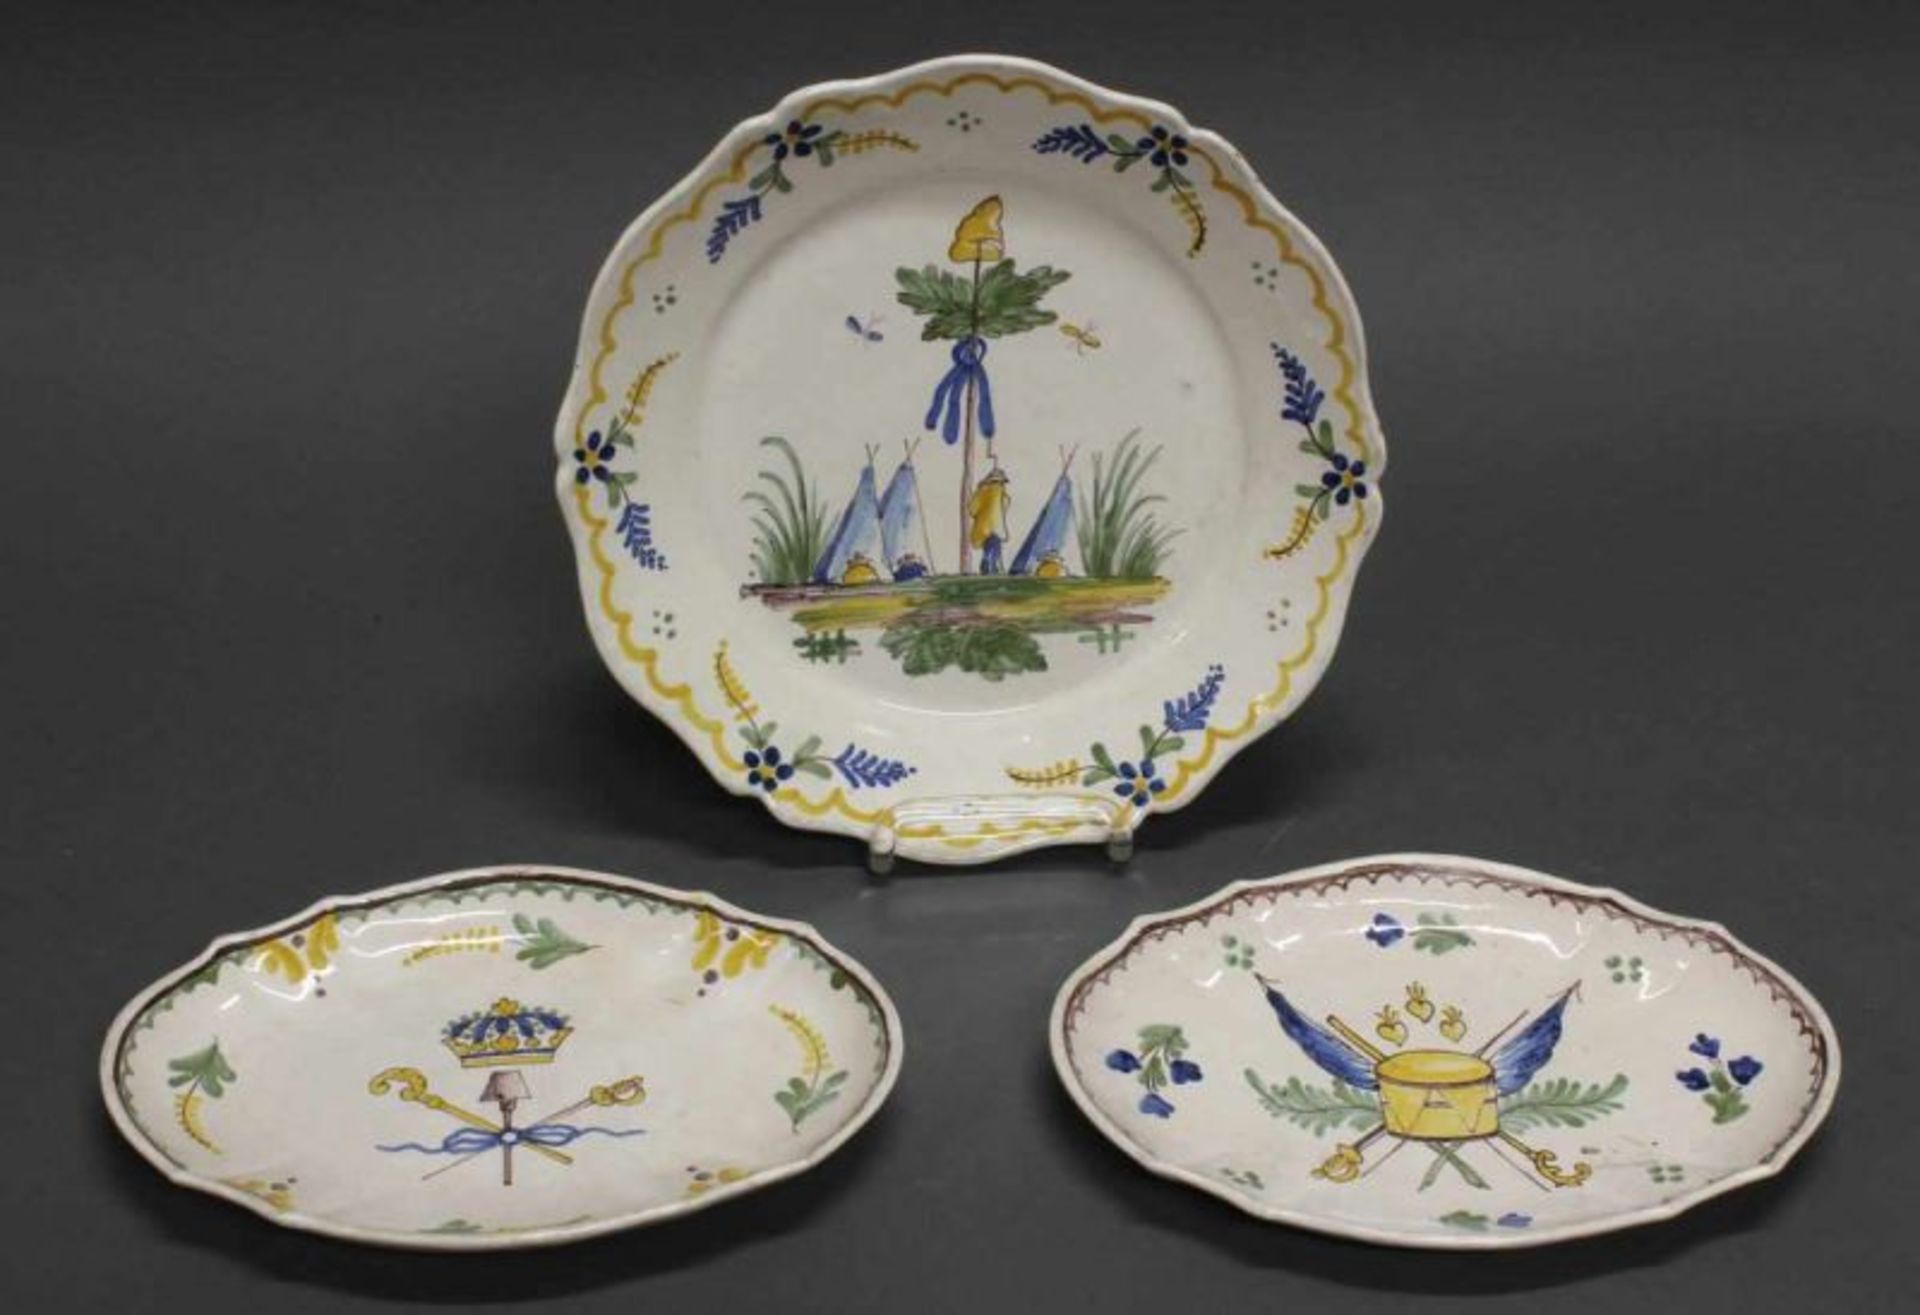 2 Platten und Teller, Fayence, Nevers, um 1800, ungemarkt, farbig bemalt, Platten oval, 21.5 x 14.